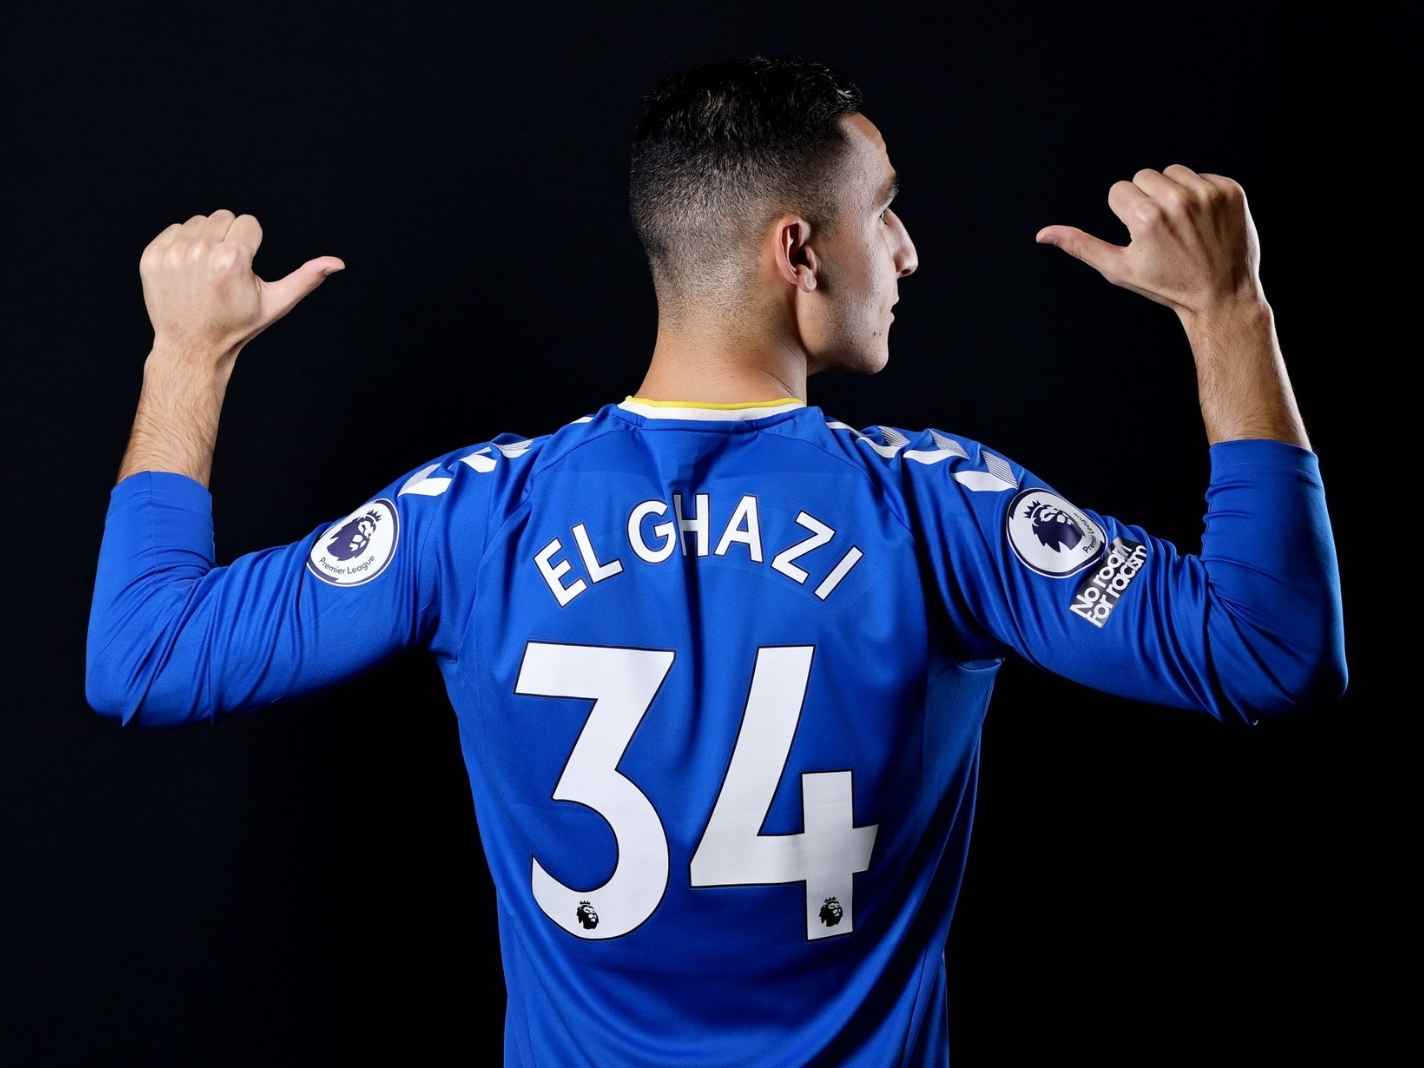 The wonderful reason why Anwar El Ghazi will wear number 34 at Everton